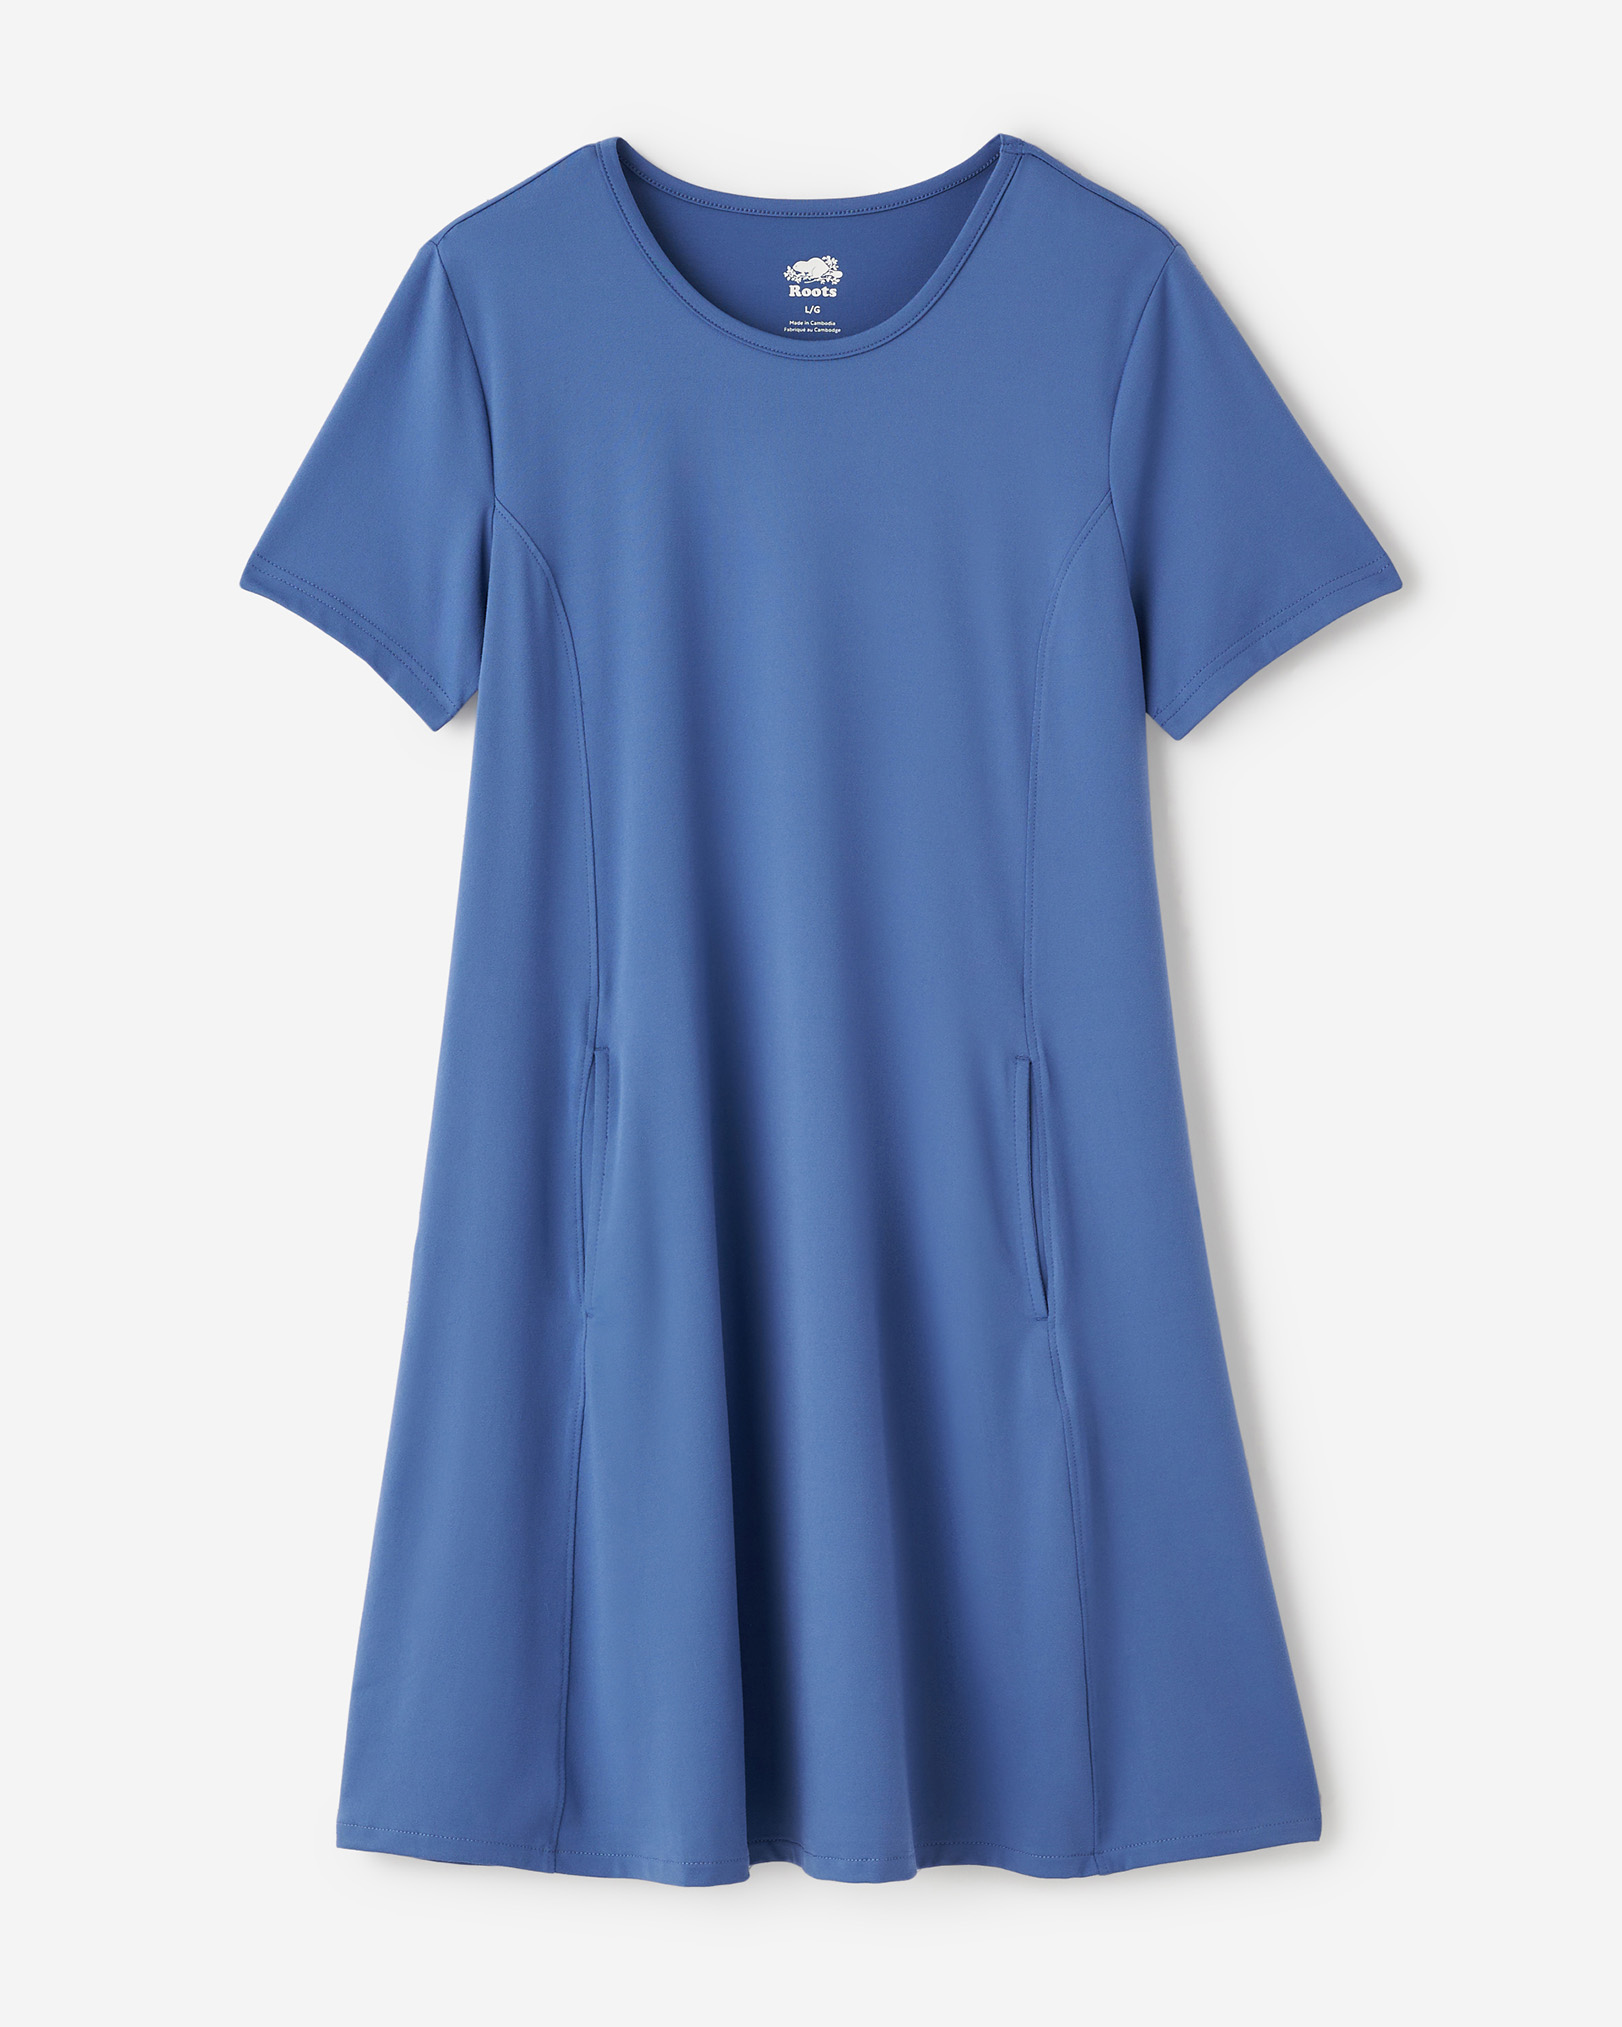 Roots Renew Short Sleeve Mini Dress in Blue Horizon